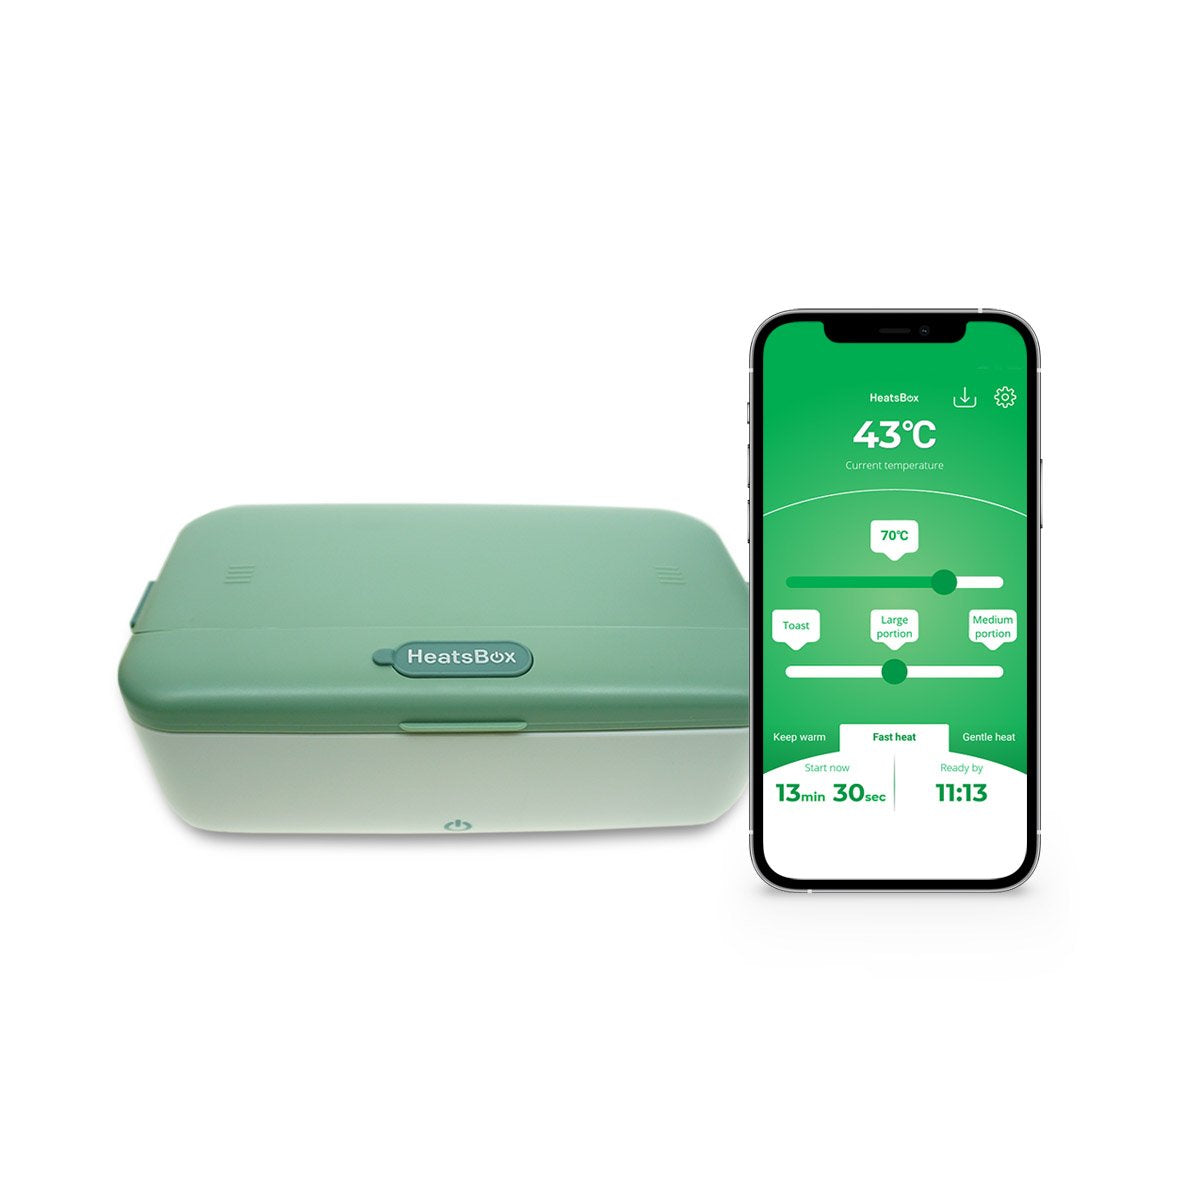 HeatsBox LIFE (App-controlled Smart Lunch Box) - Storming Gravity